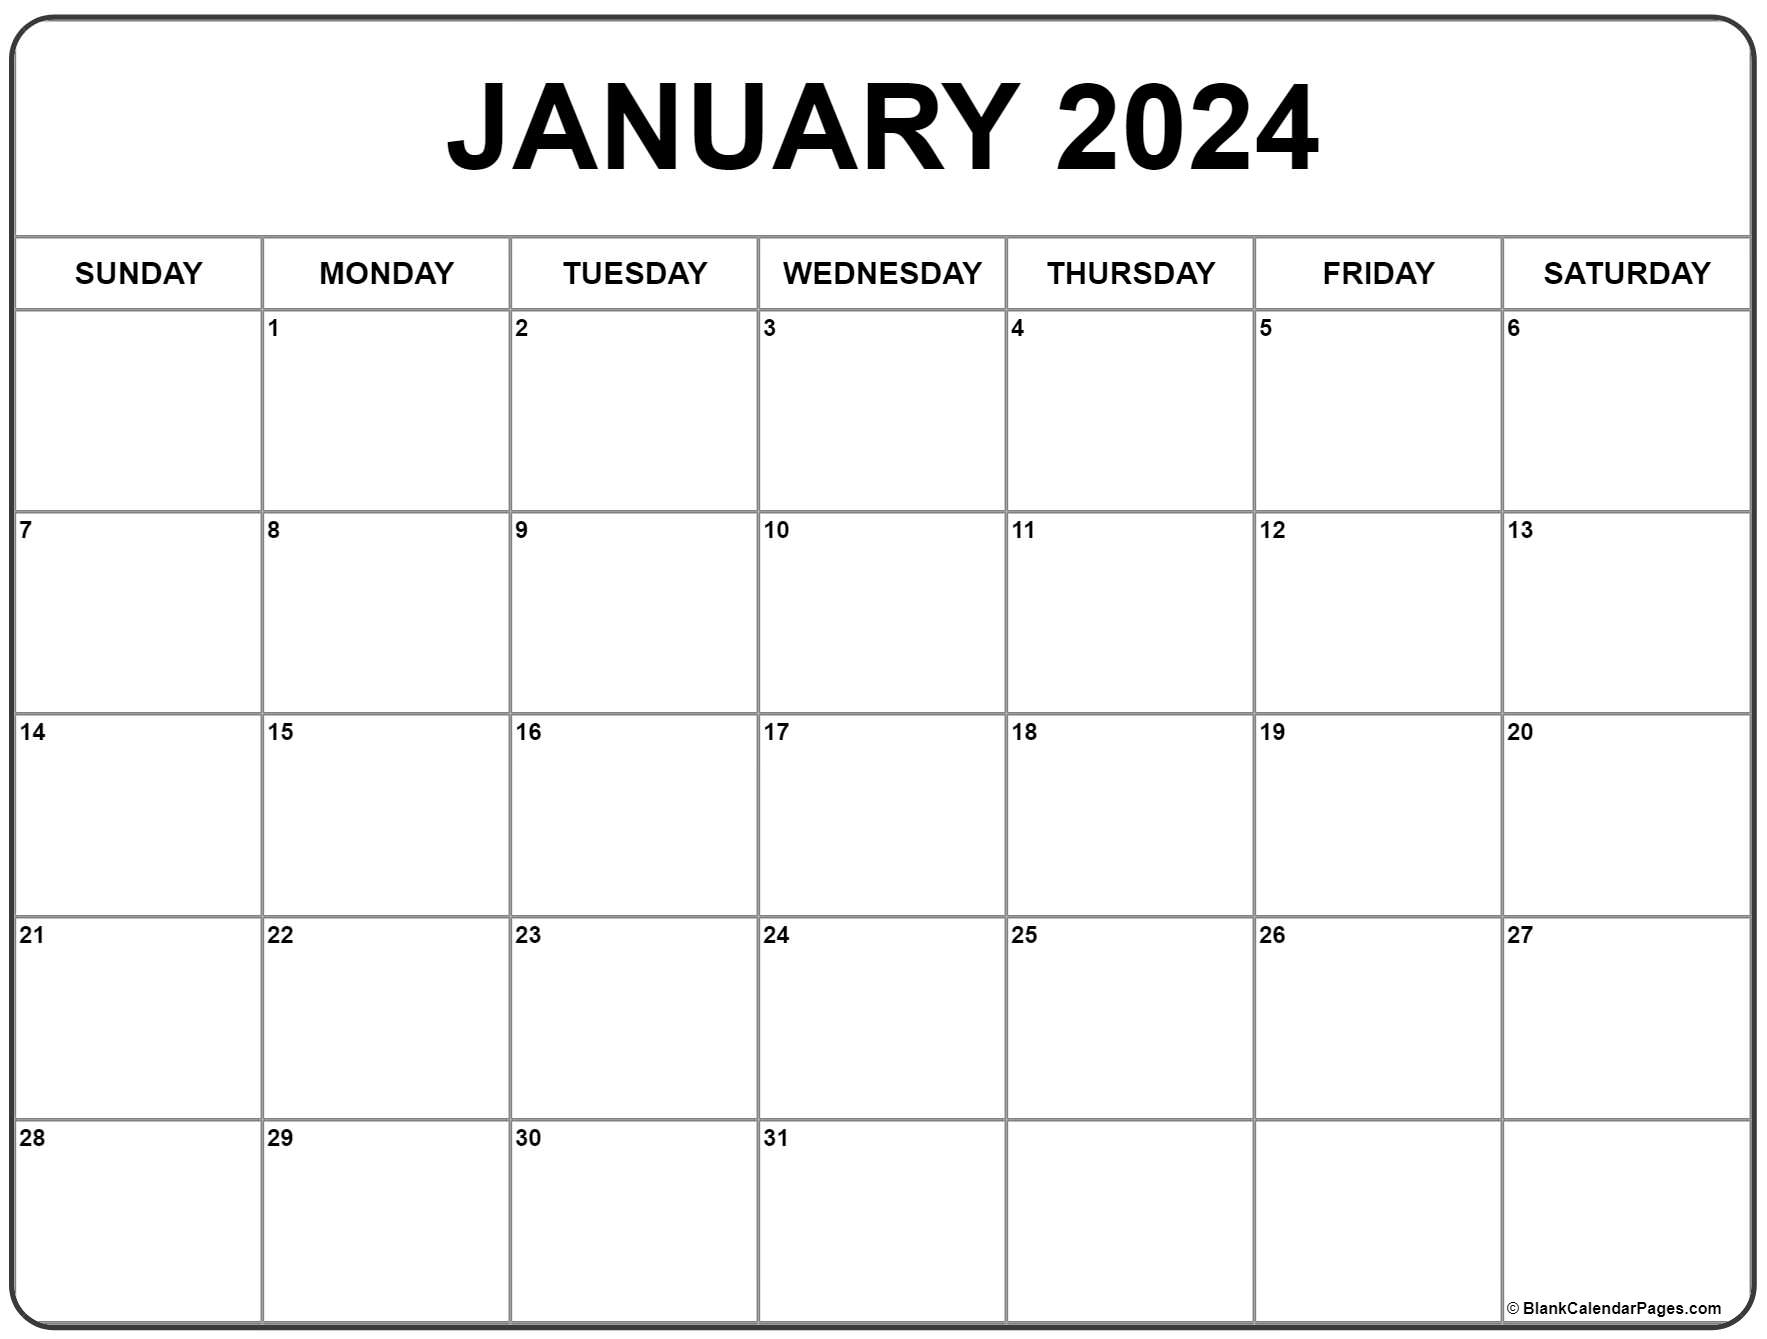 January 2024 Calendar | Free Printable Calendar | Blank 2024 Calendar